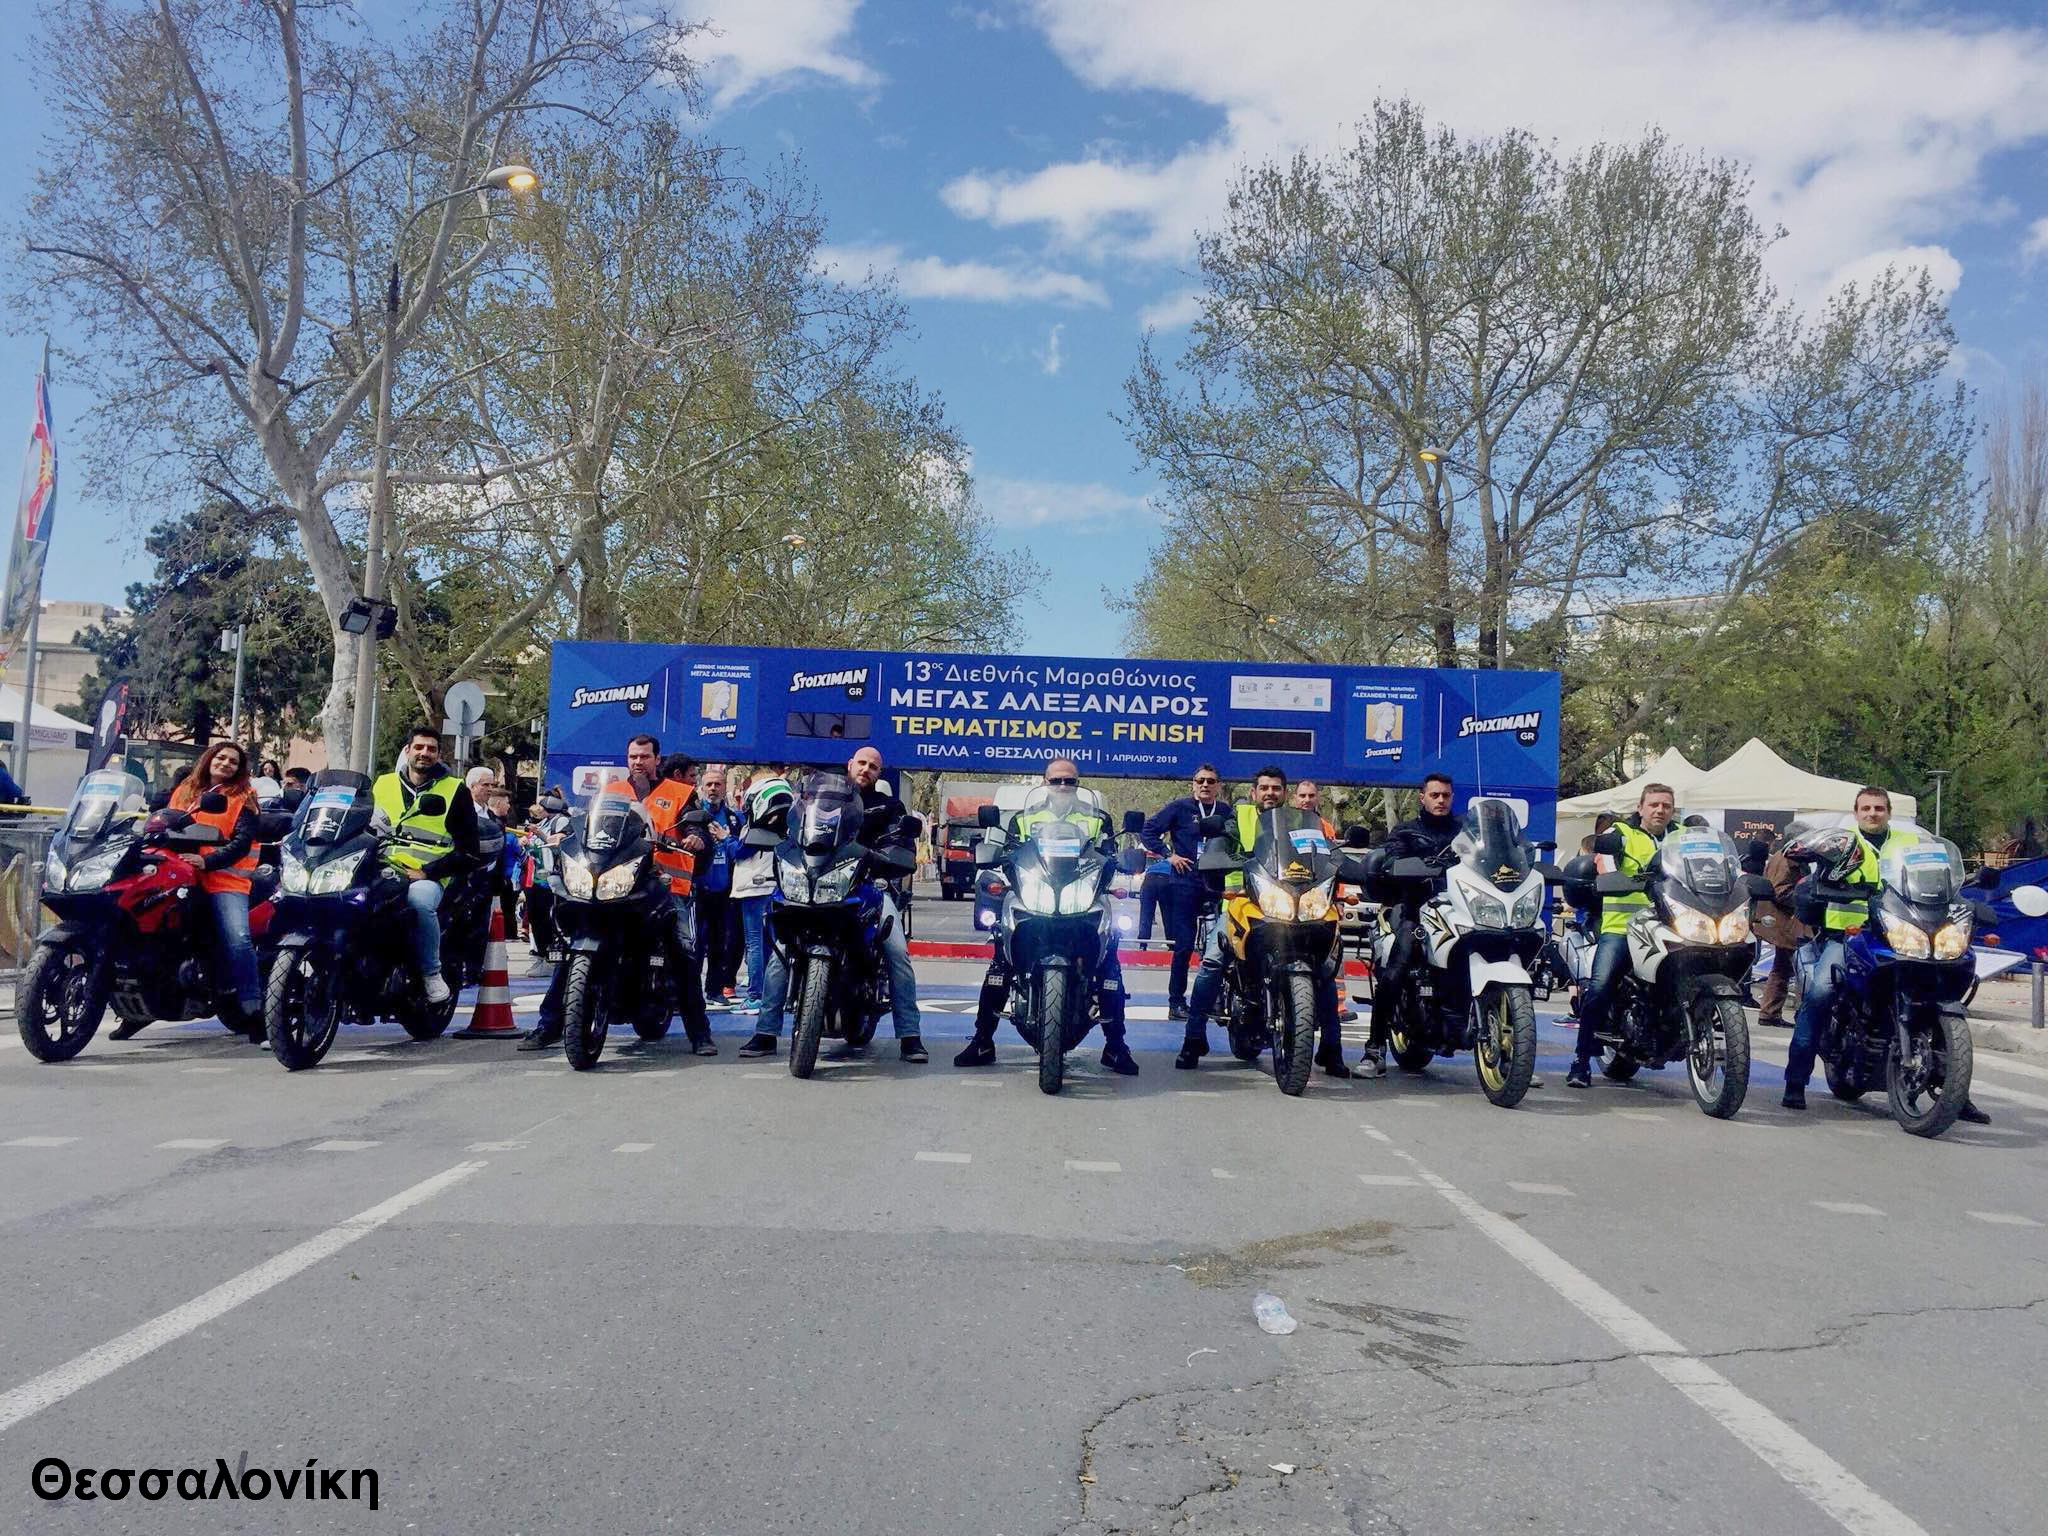 V-Strom Greek Riders: Συνεχίζουν το έργο  του εθελοντισμού